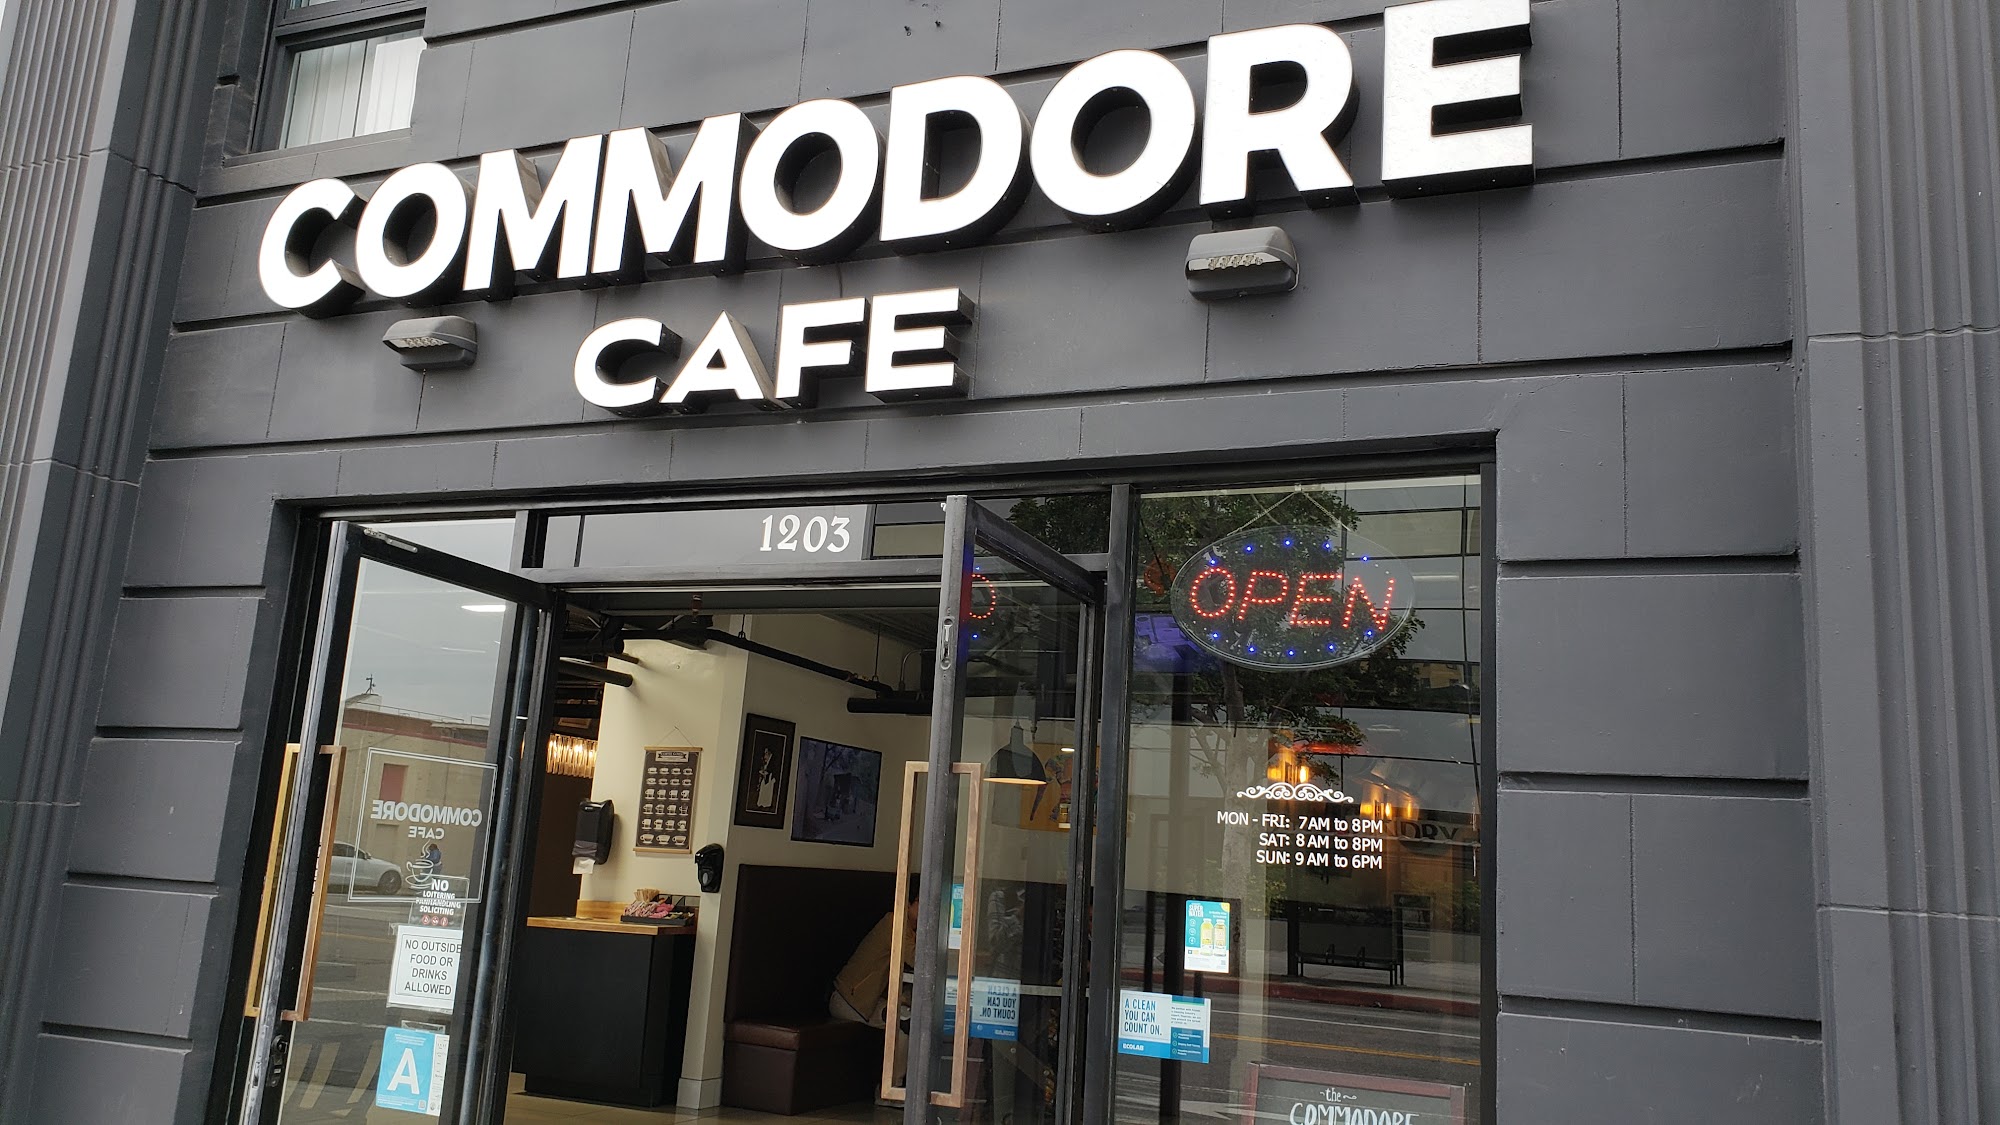 Commodore Cafe